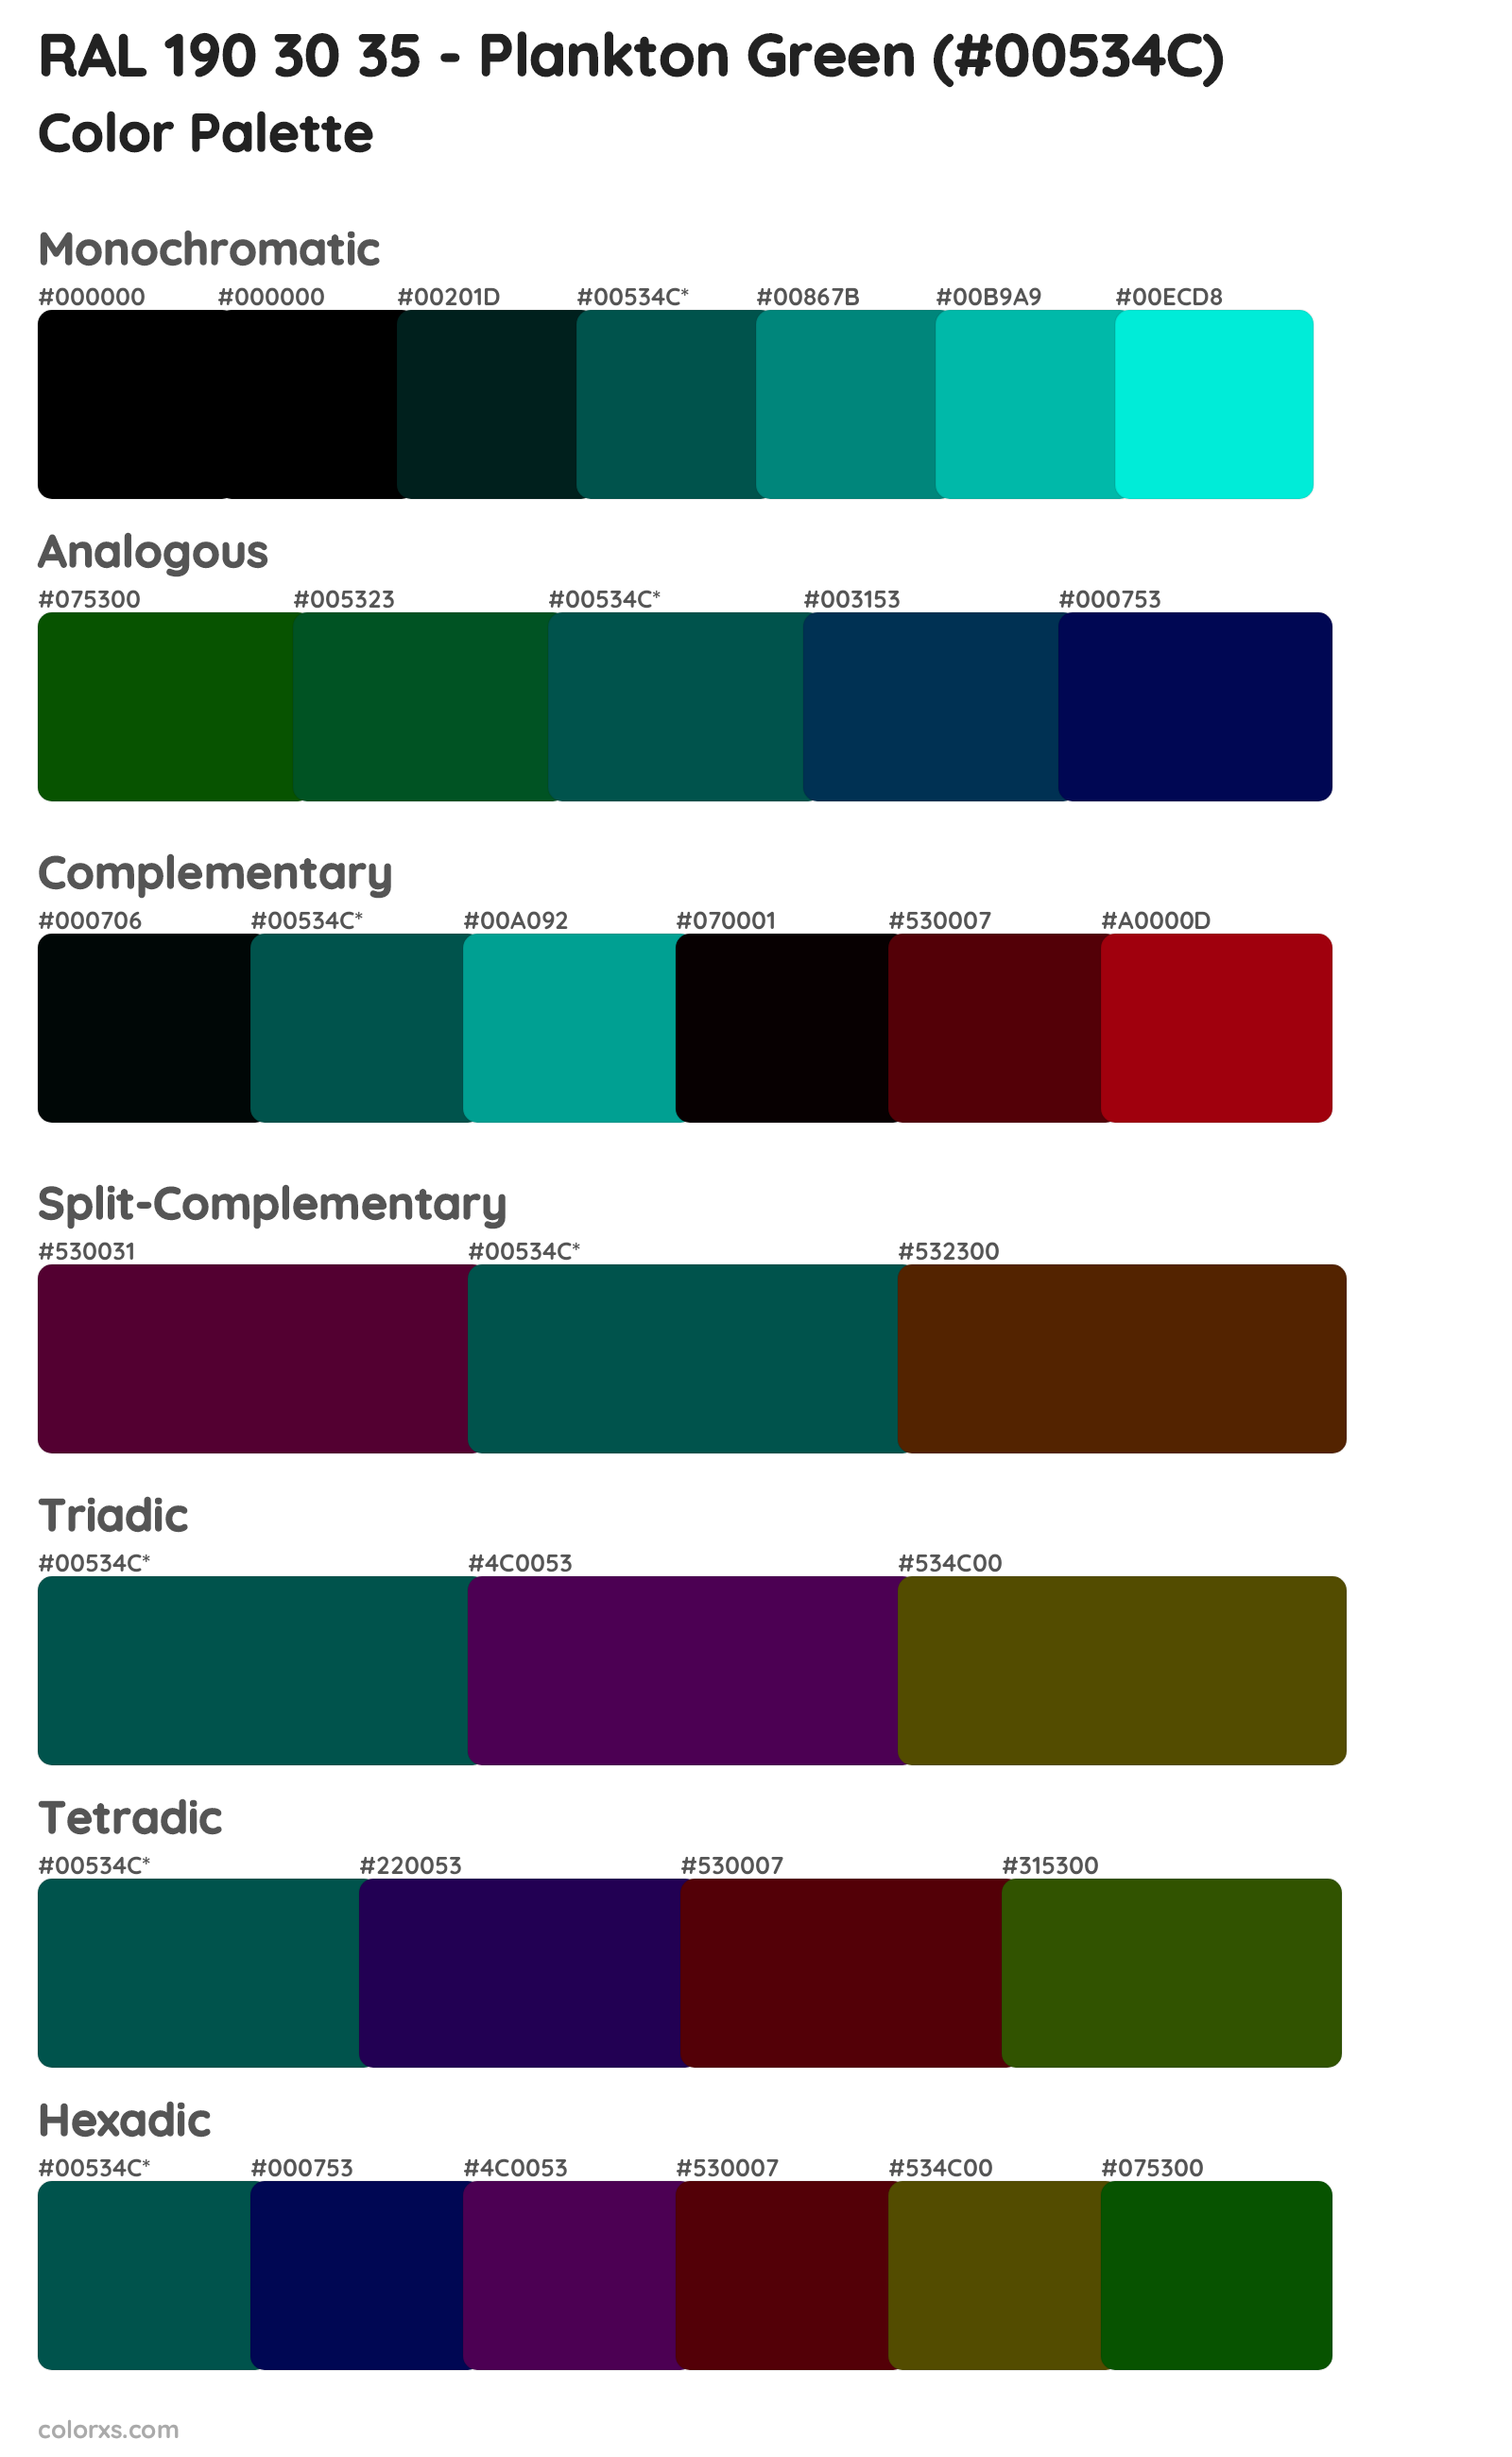 RAL 190 30 35 - Plankton Green Color Scheme Palettes